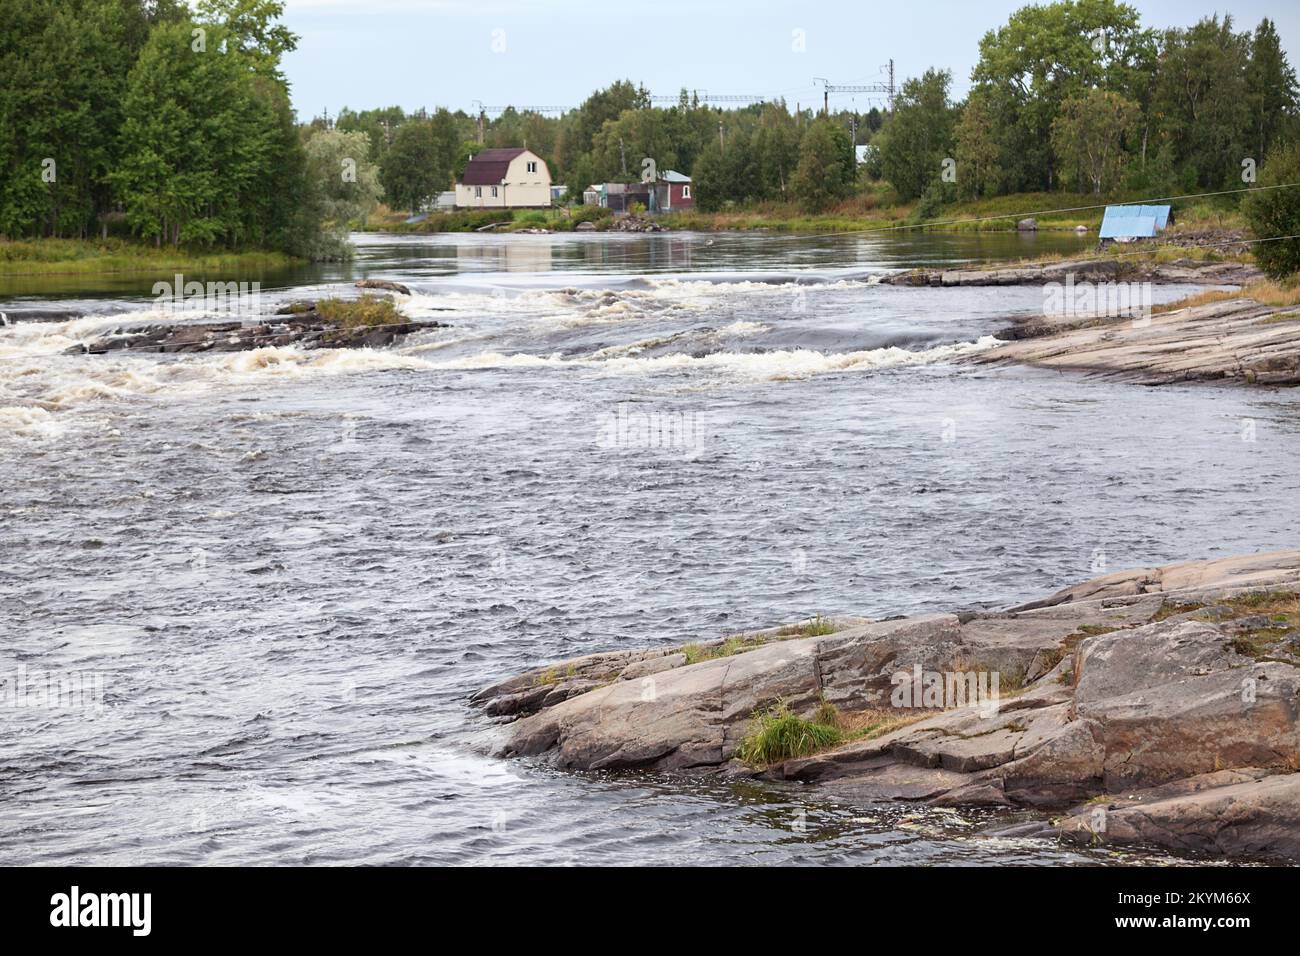 The Nizhny Vyg River flows among the rocky banks. City of Belomorsk, Karelia, northern Russia Stock Photo